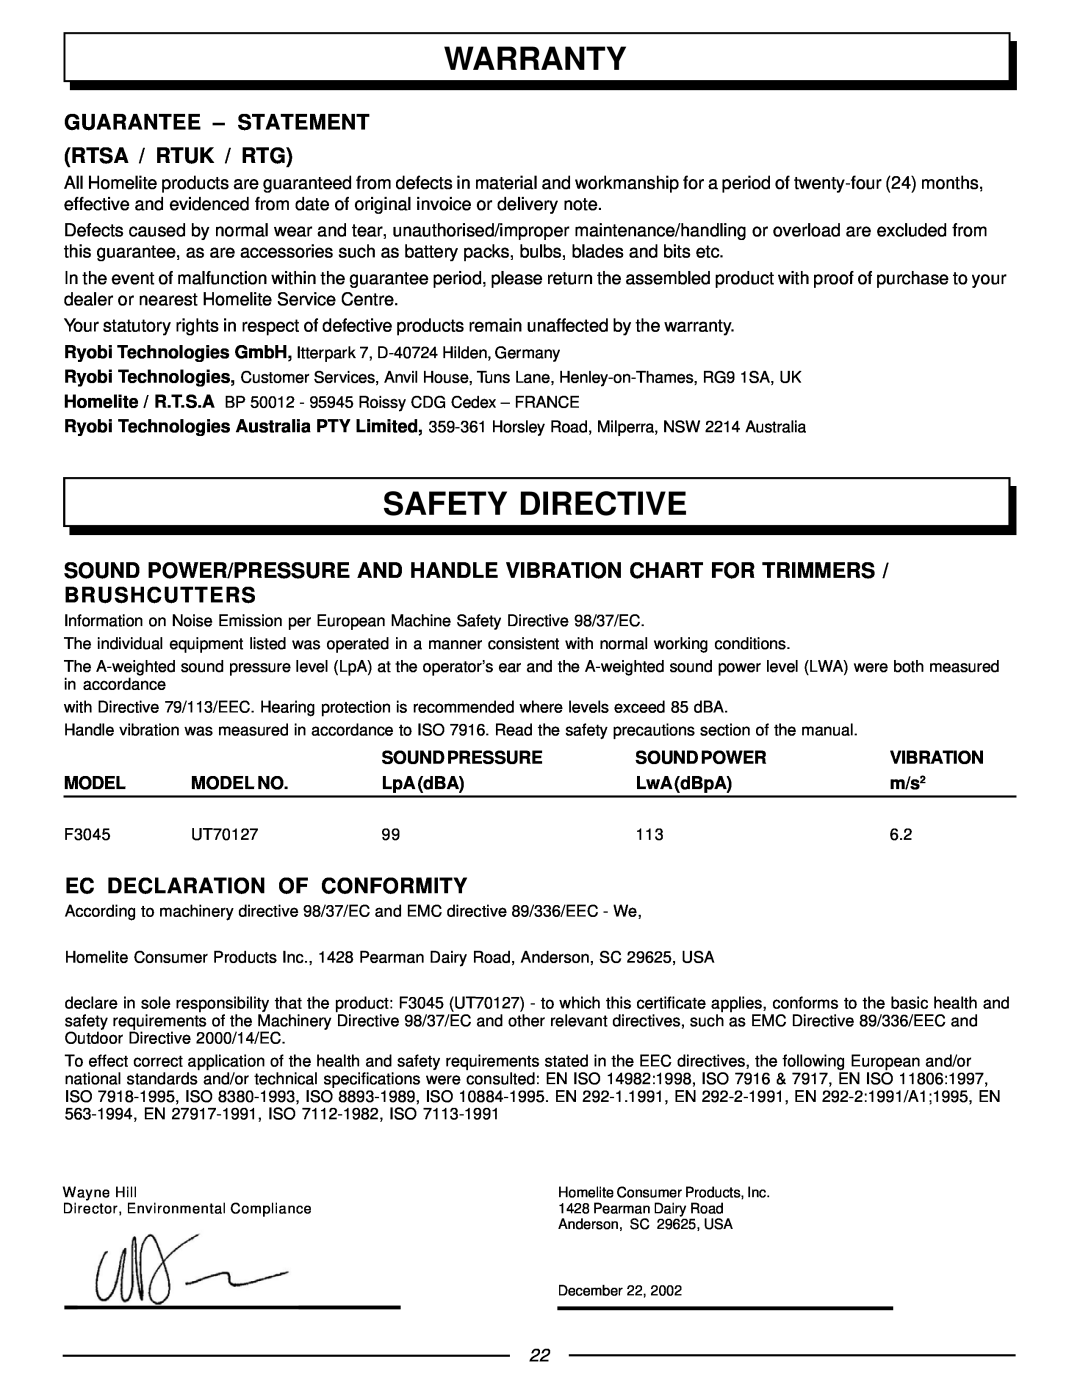 Homelite UT70127 Warranty, Safety Directive, Guarantee - Statement Rtsa / Rtuk / Rtg, Ec Declaration Of Conformity, Model 